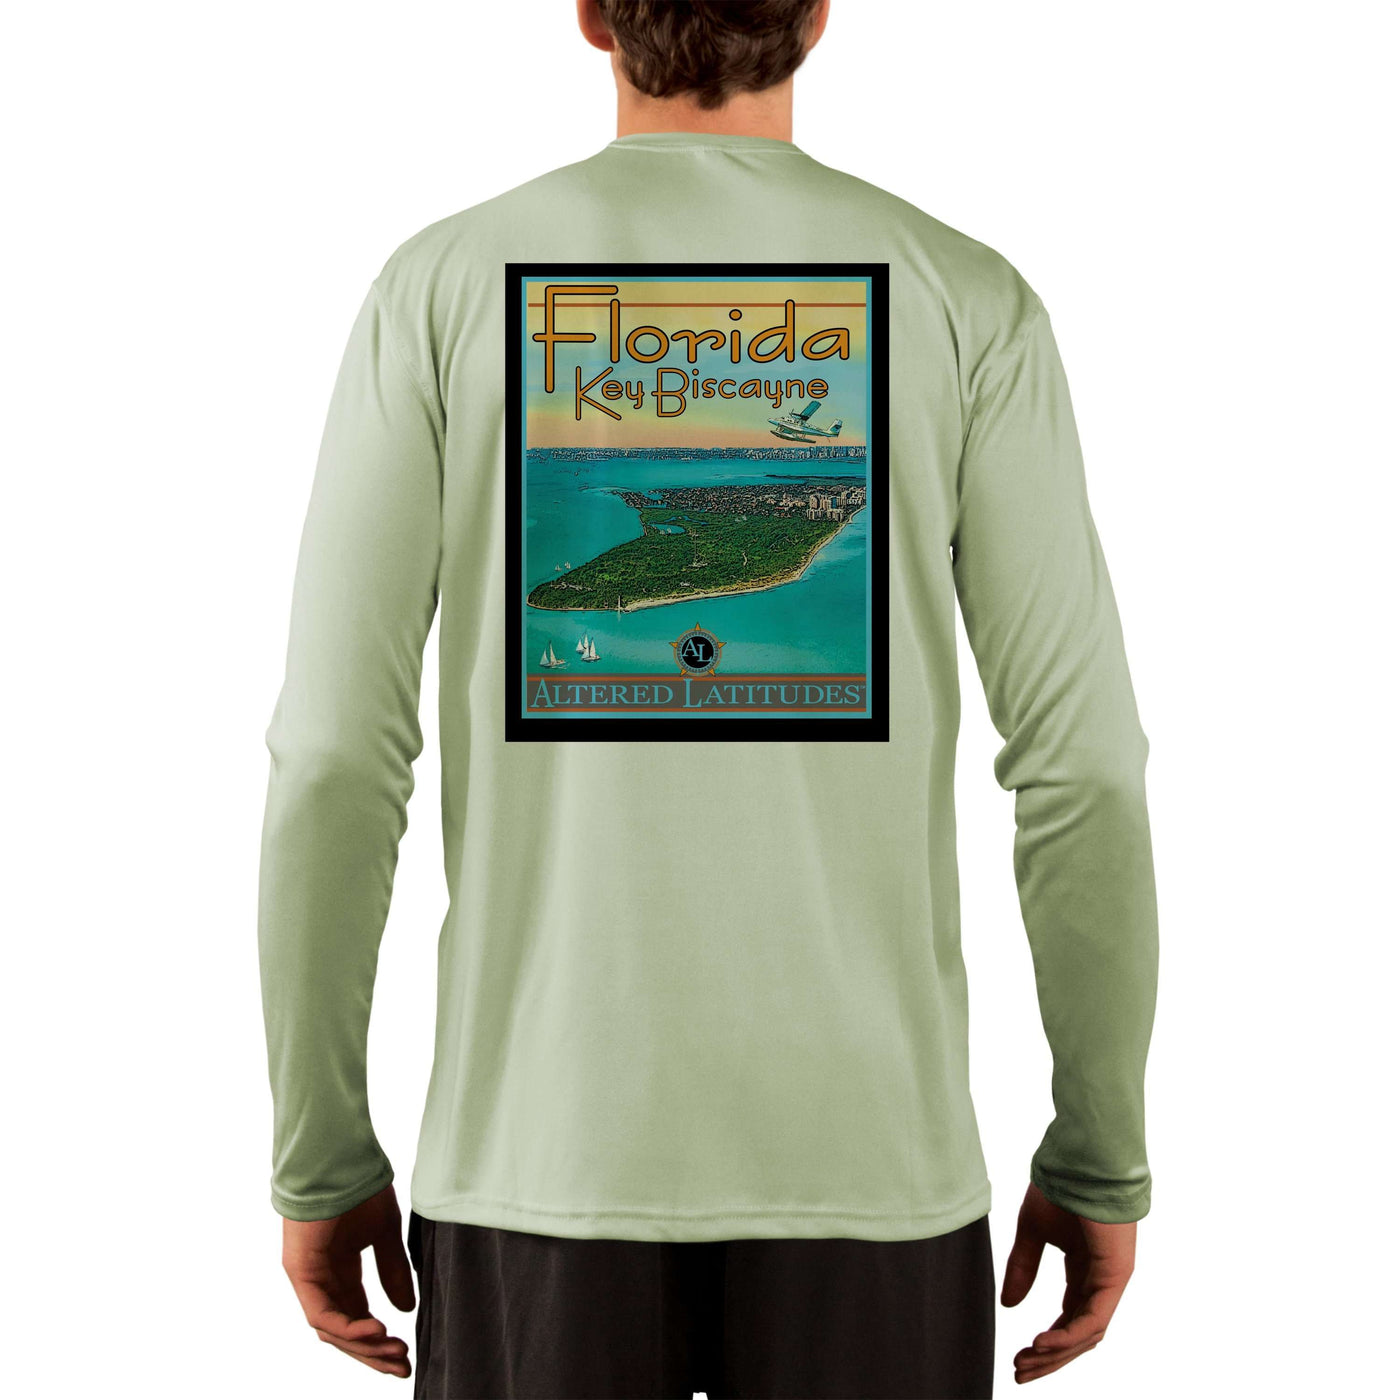 Vintage Destination Key Biscayne Men's UPF 50+ UV Sun Protection Long Sleeve T-Shirt